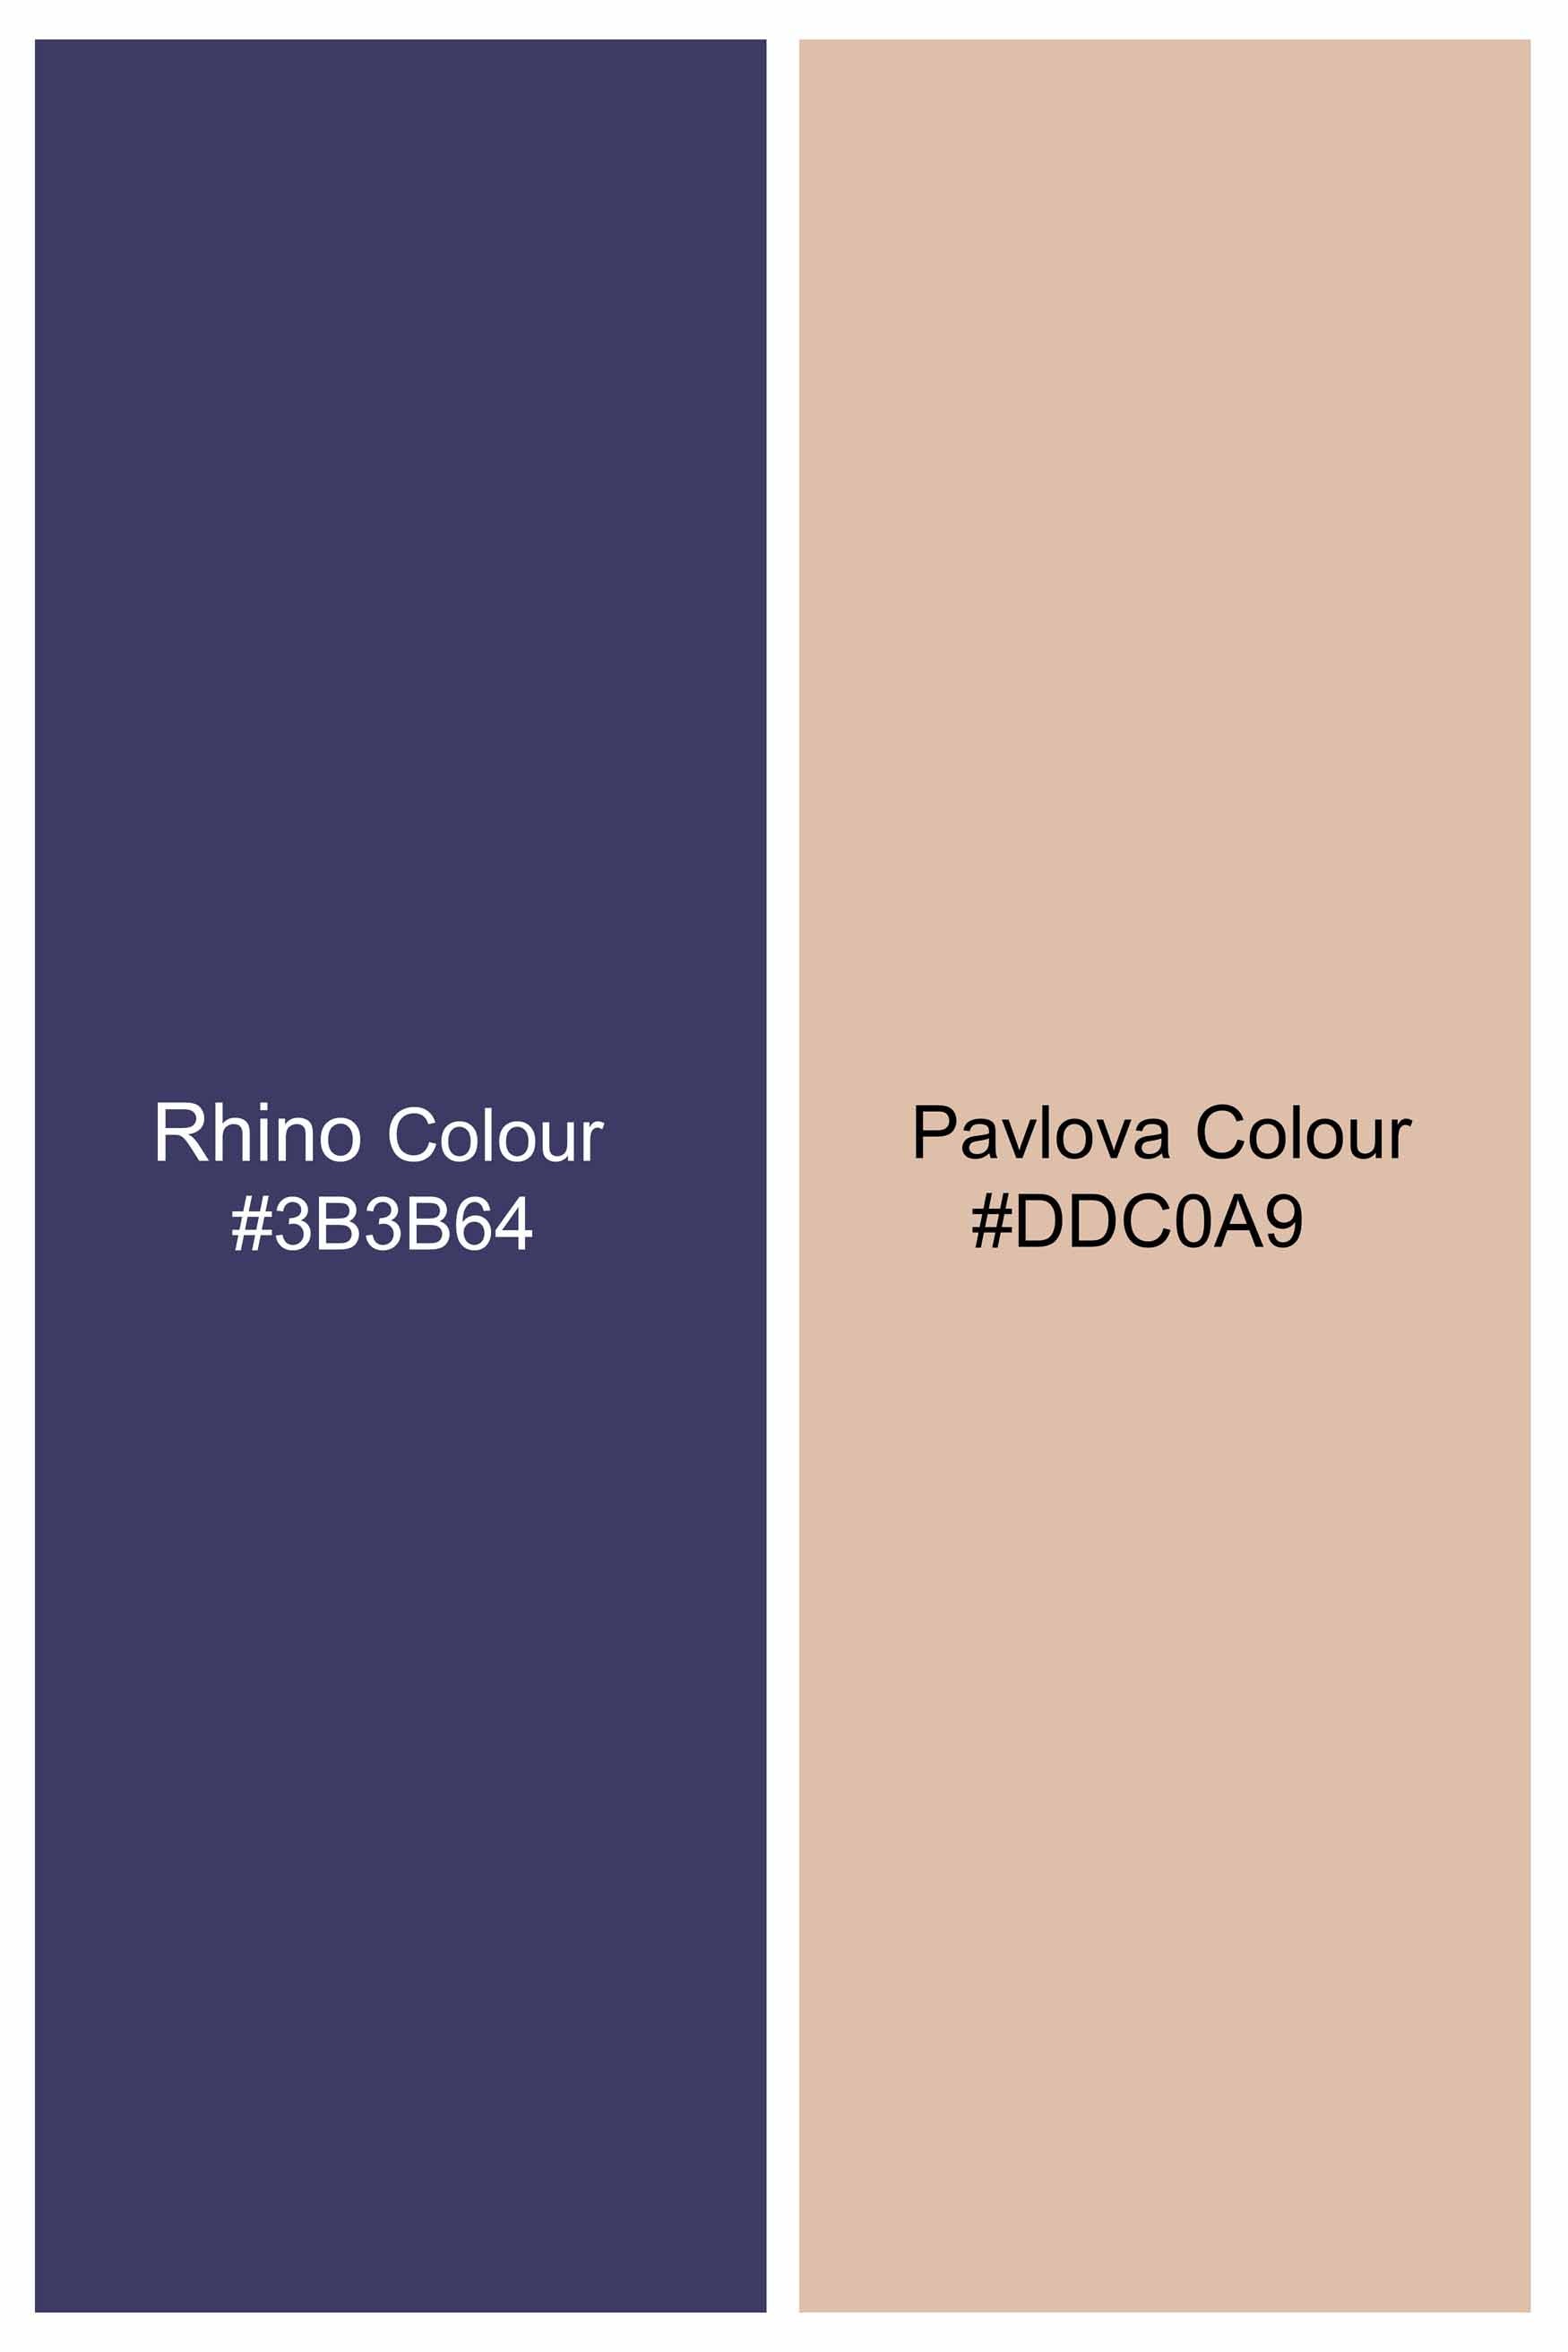 Rhino Blue and Pavlova Beige Striped Hand Painted Twill Premium Cotton Designer Shirt 6854-CA-ART-38, 6854-CA-ART-H-38, 6854-CA-ART-39, 6854-CA-ART-H-39, 6854-CA-ART-40, 6854-CA-ART-H-40, 6854-CA-ART-42, 6854-CA-ART-H-42, 6854-CA-ART-44, 6854-CA-ART-H-44, 6854-CA-ART-46, 6854-CA-ART-H-46, 6854-CA-ART-48, 6854-CA-ART-H-48, 6854-CA-ART-50, 6854-CA-ART-H-50, 6854-CA-ART-52, 6854-CA-ART-H-52